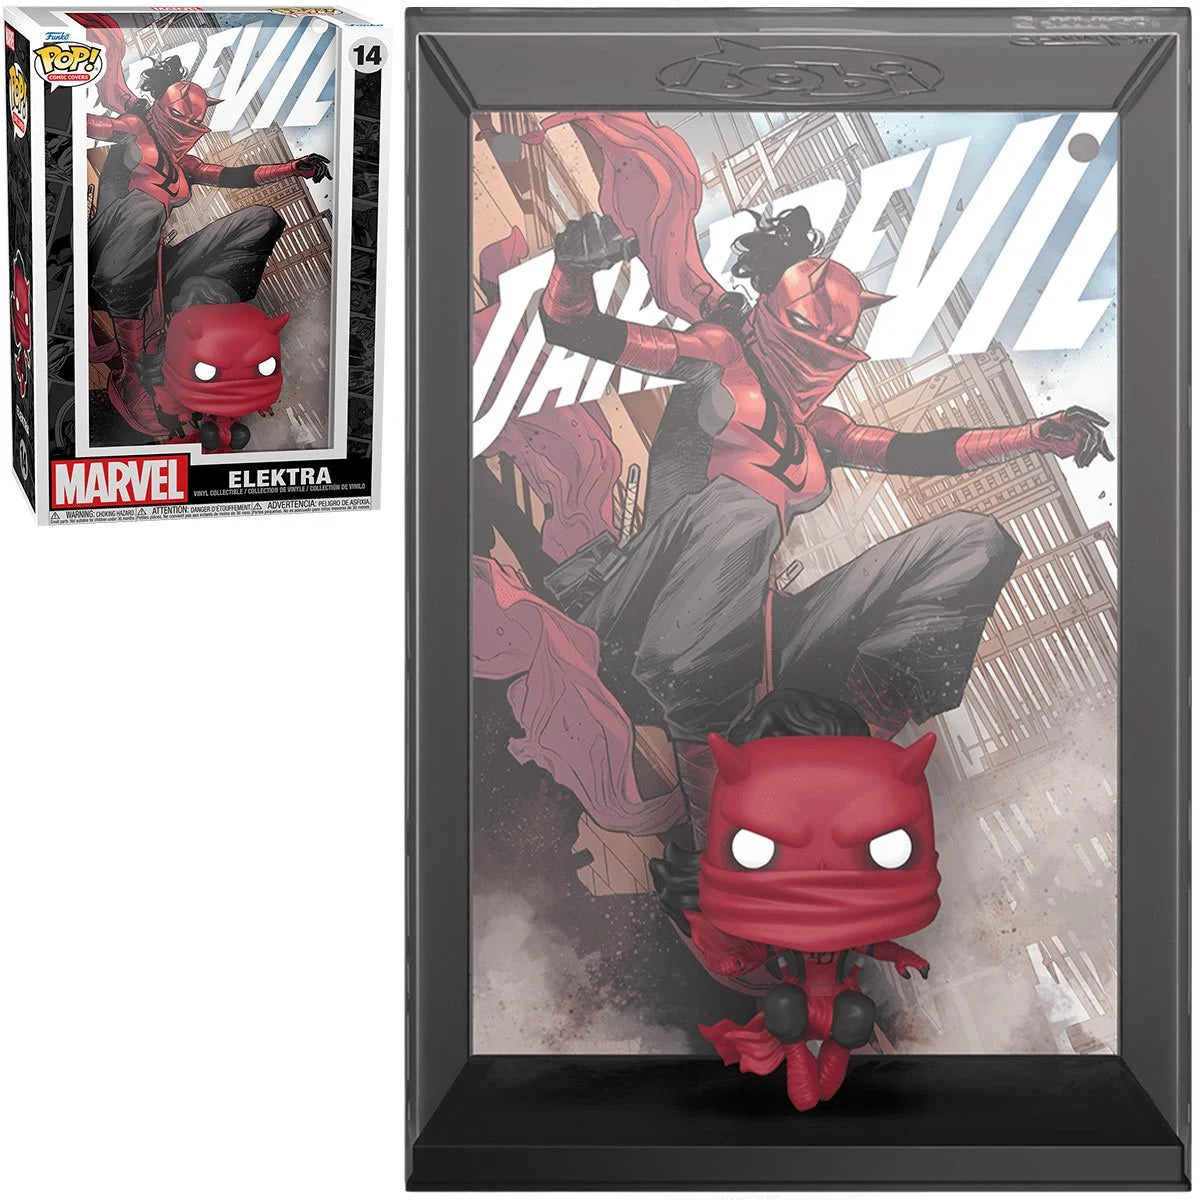 Elektra Daredevil Pop! Comic Cover Figure